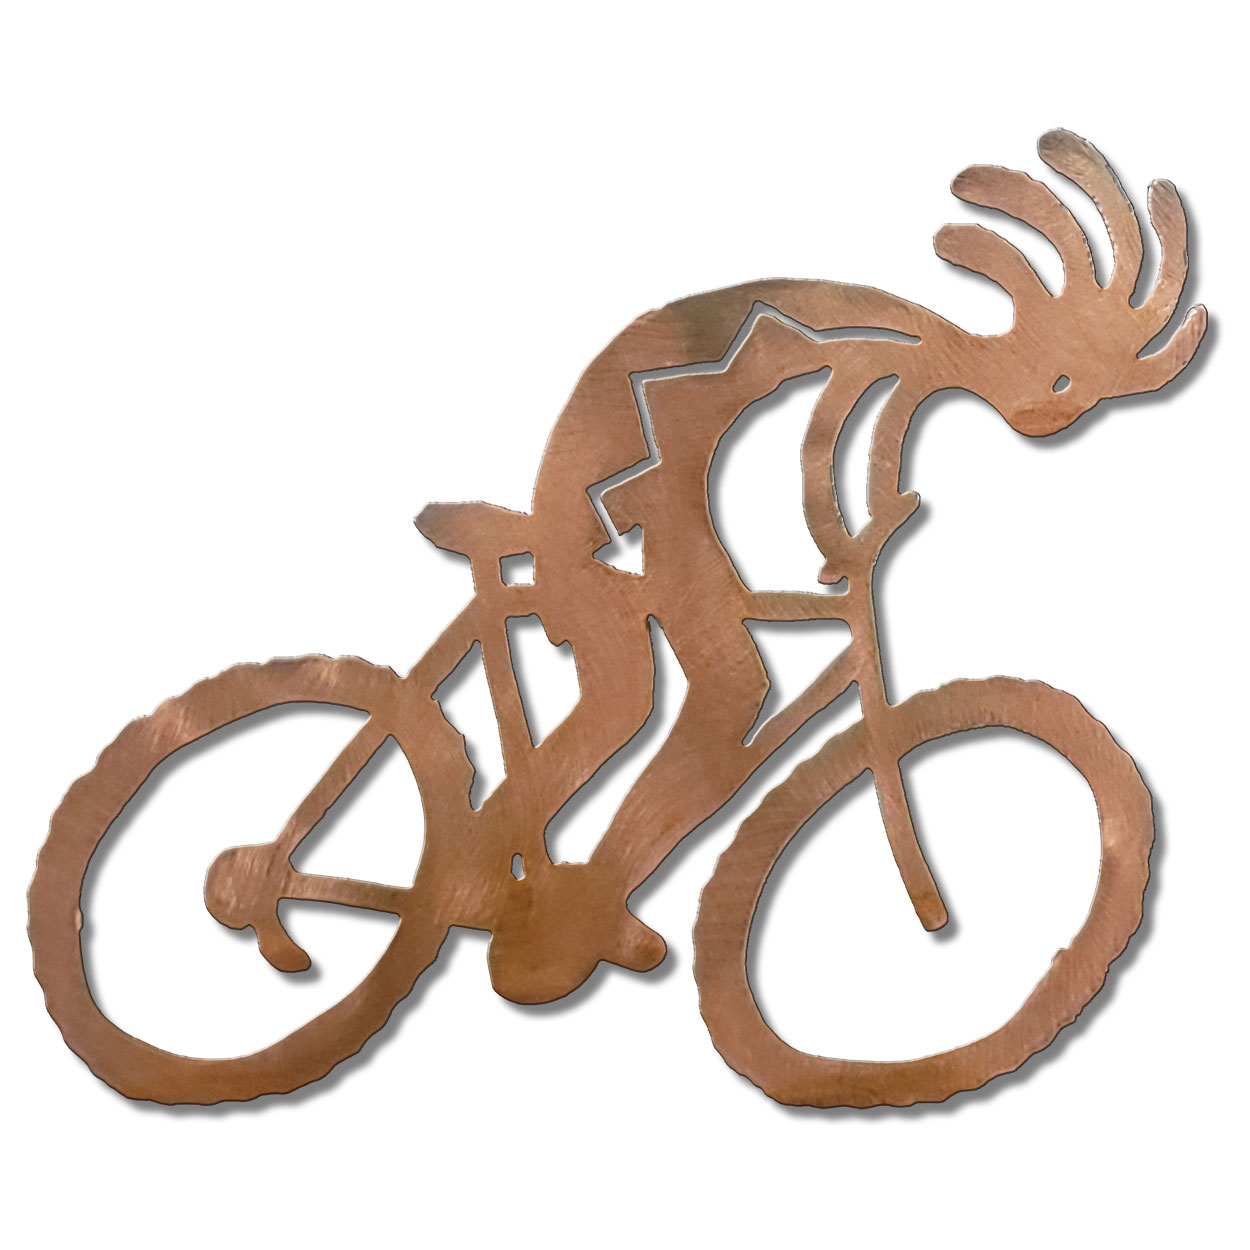 165604 - 30in Mountain Biker Metal Wall Art in Rust Patina